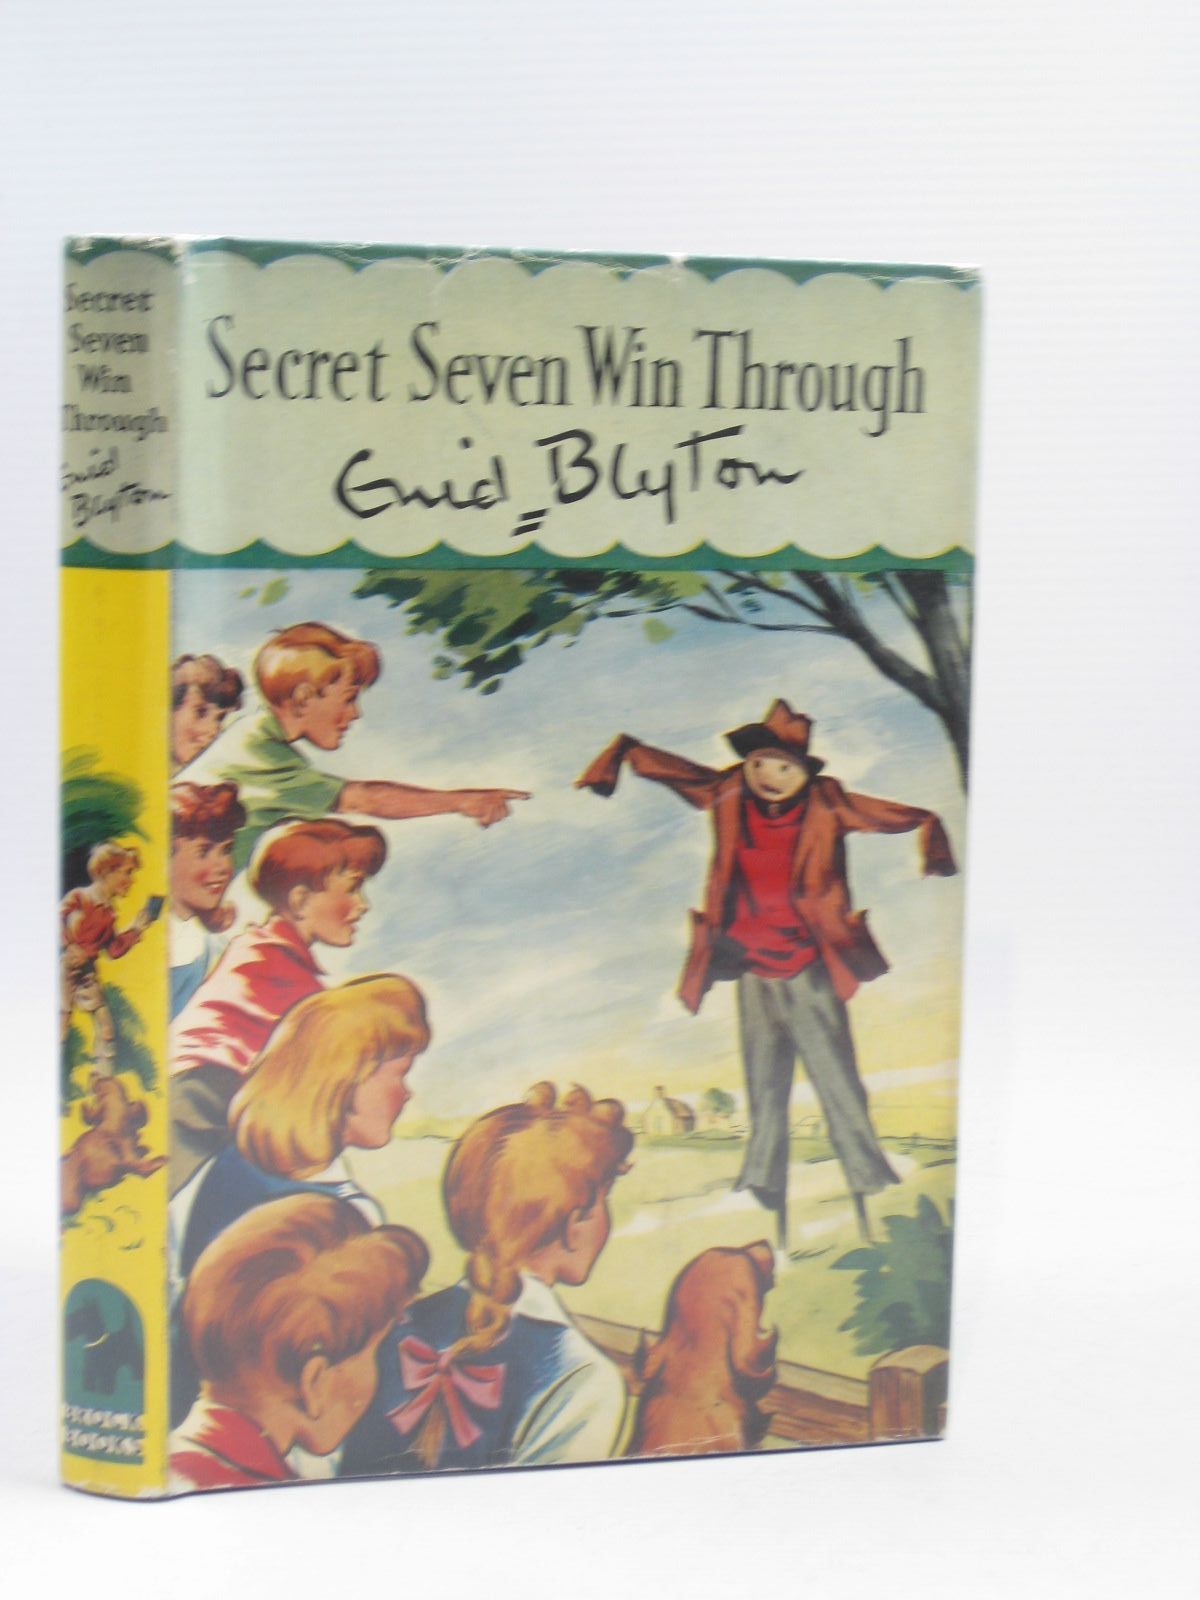 Cover of SECRET SEVEN WIN THROUGH by Enid Blyton